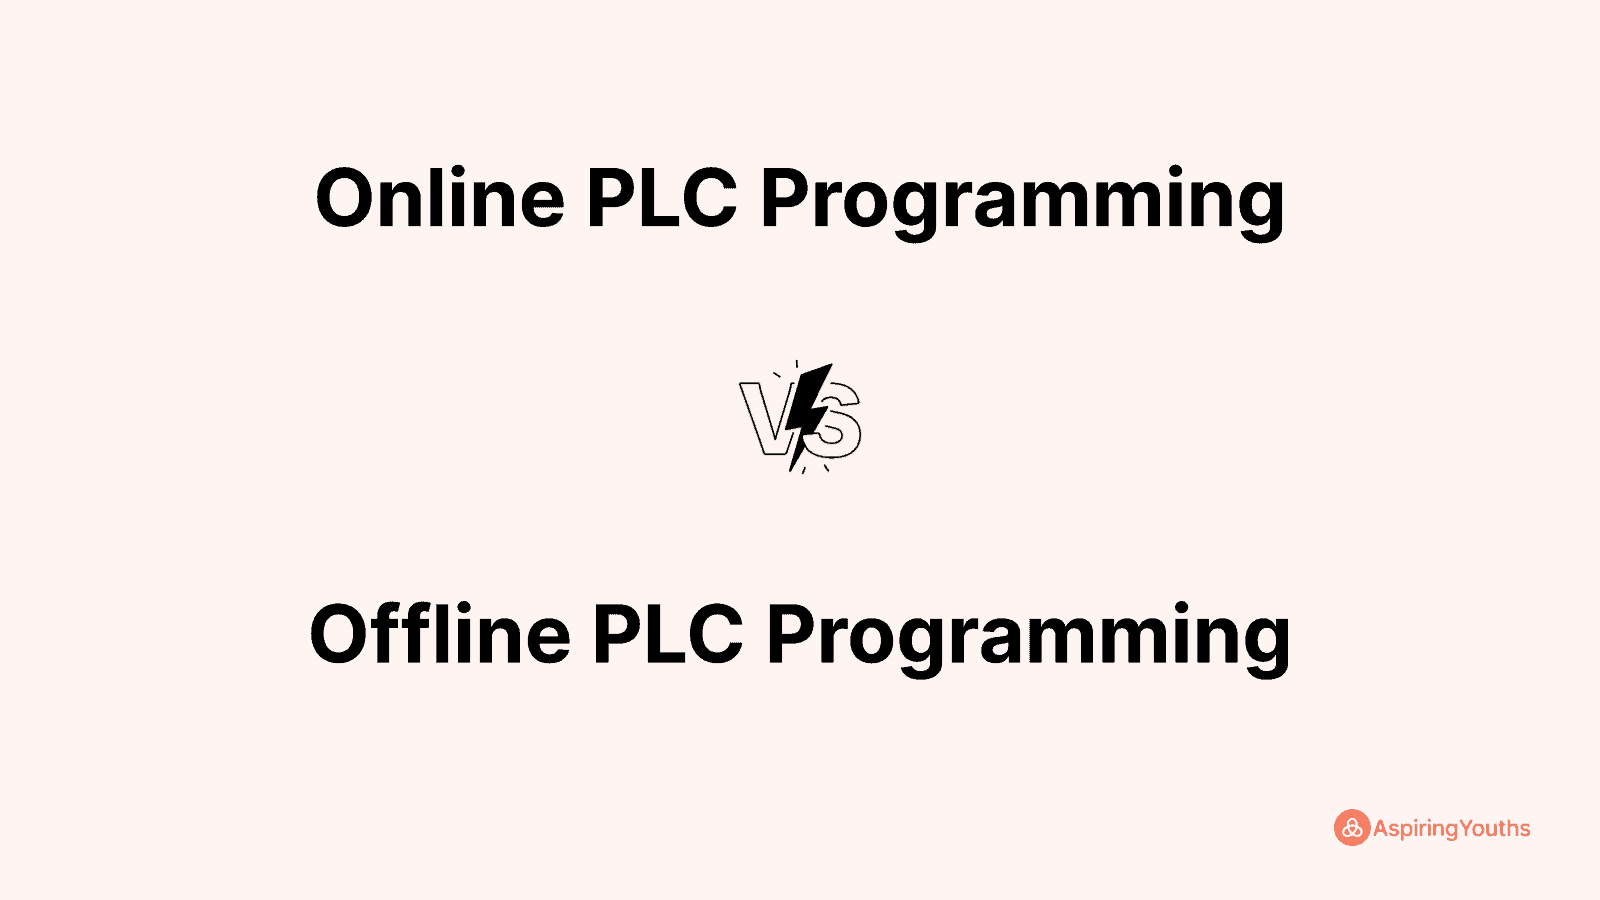 Online PLC Programming vs Offline PLC Programming